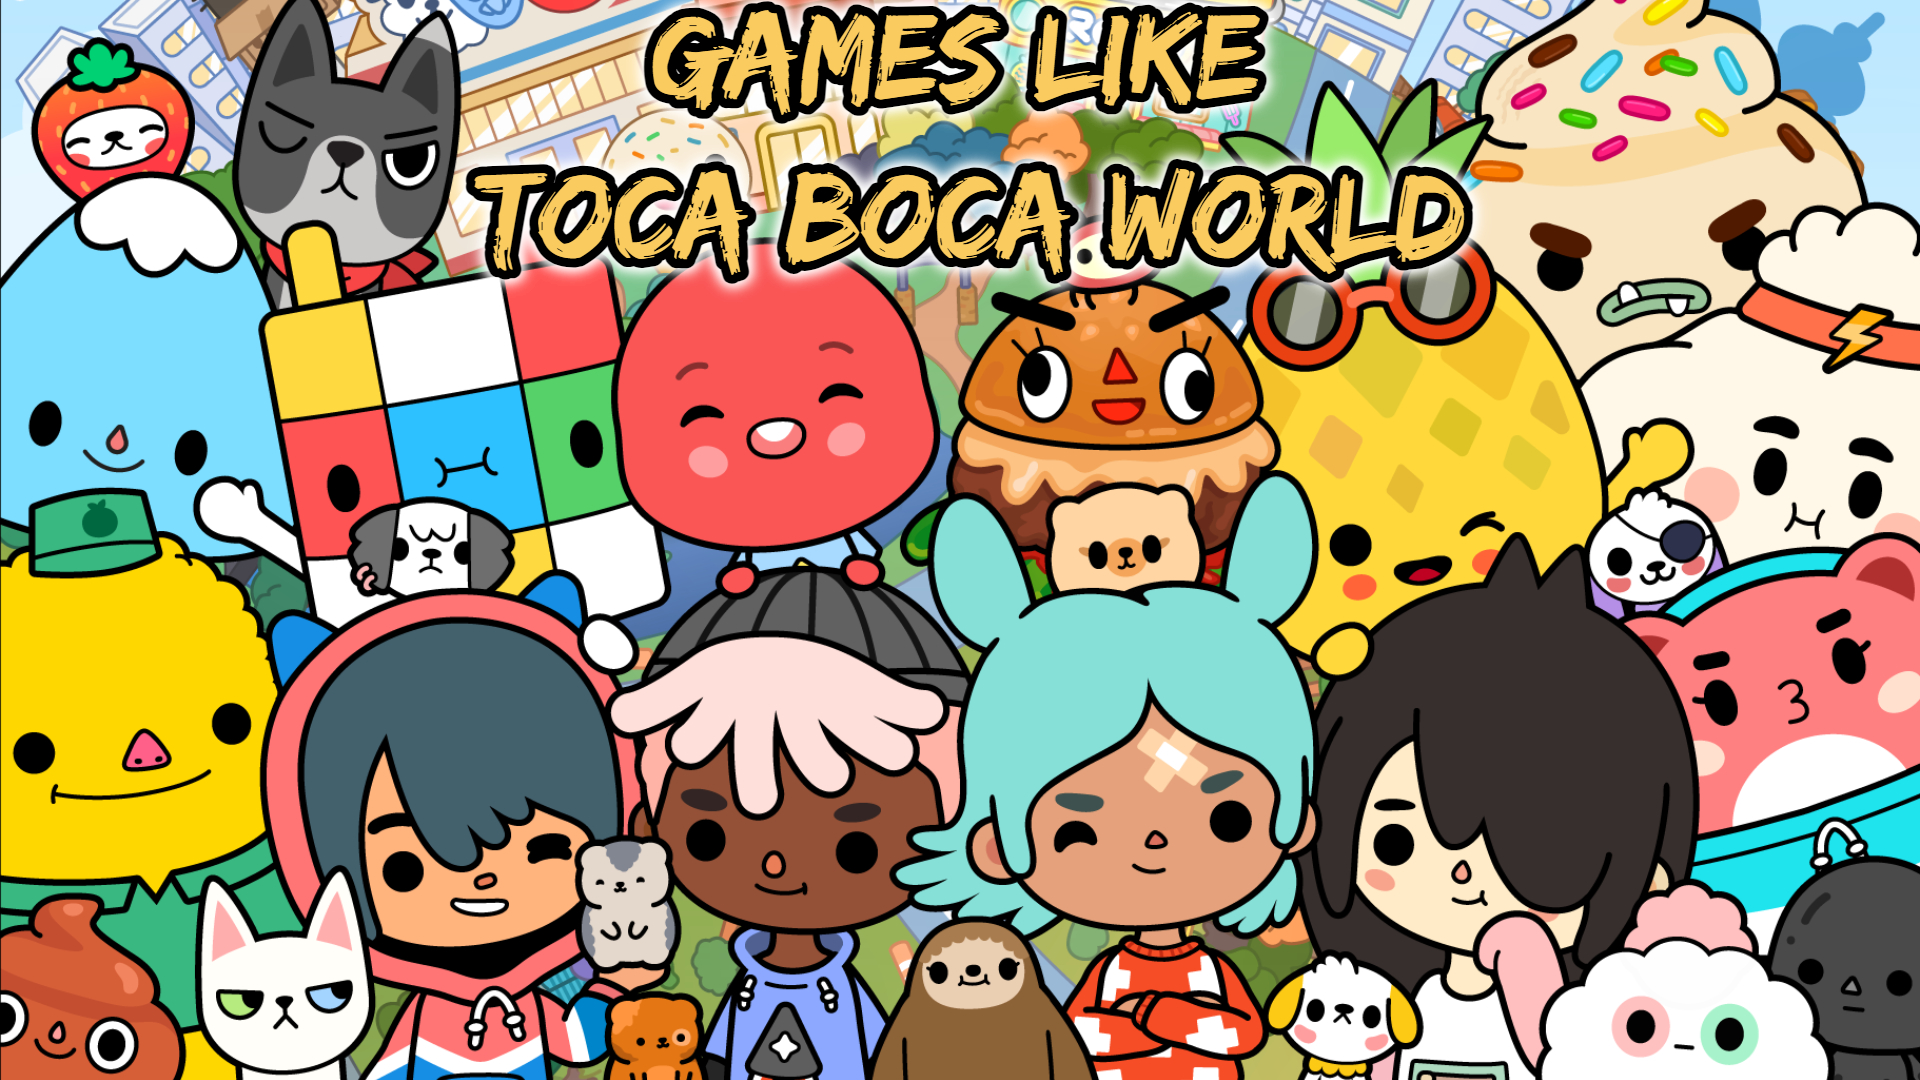 Top 5 Best Games Like Toca Boca World on Mobile